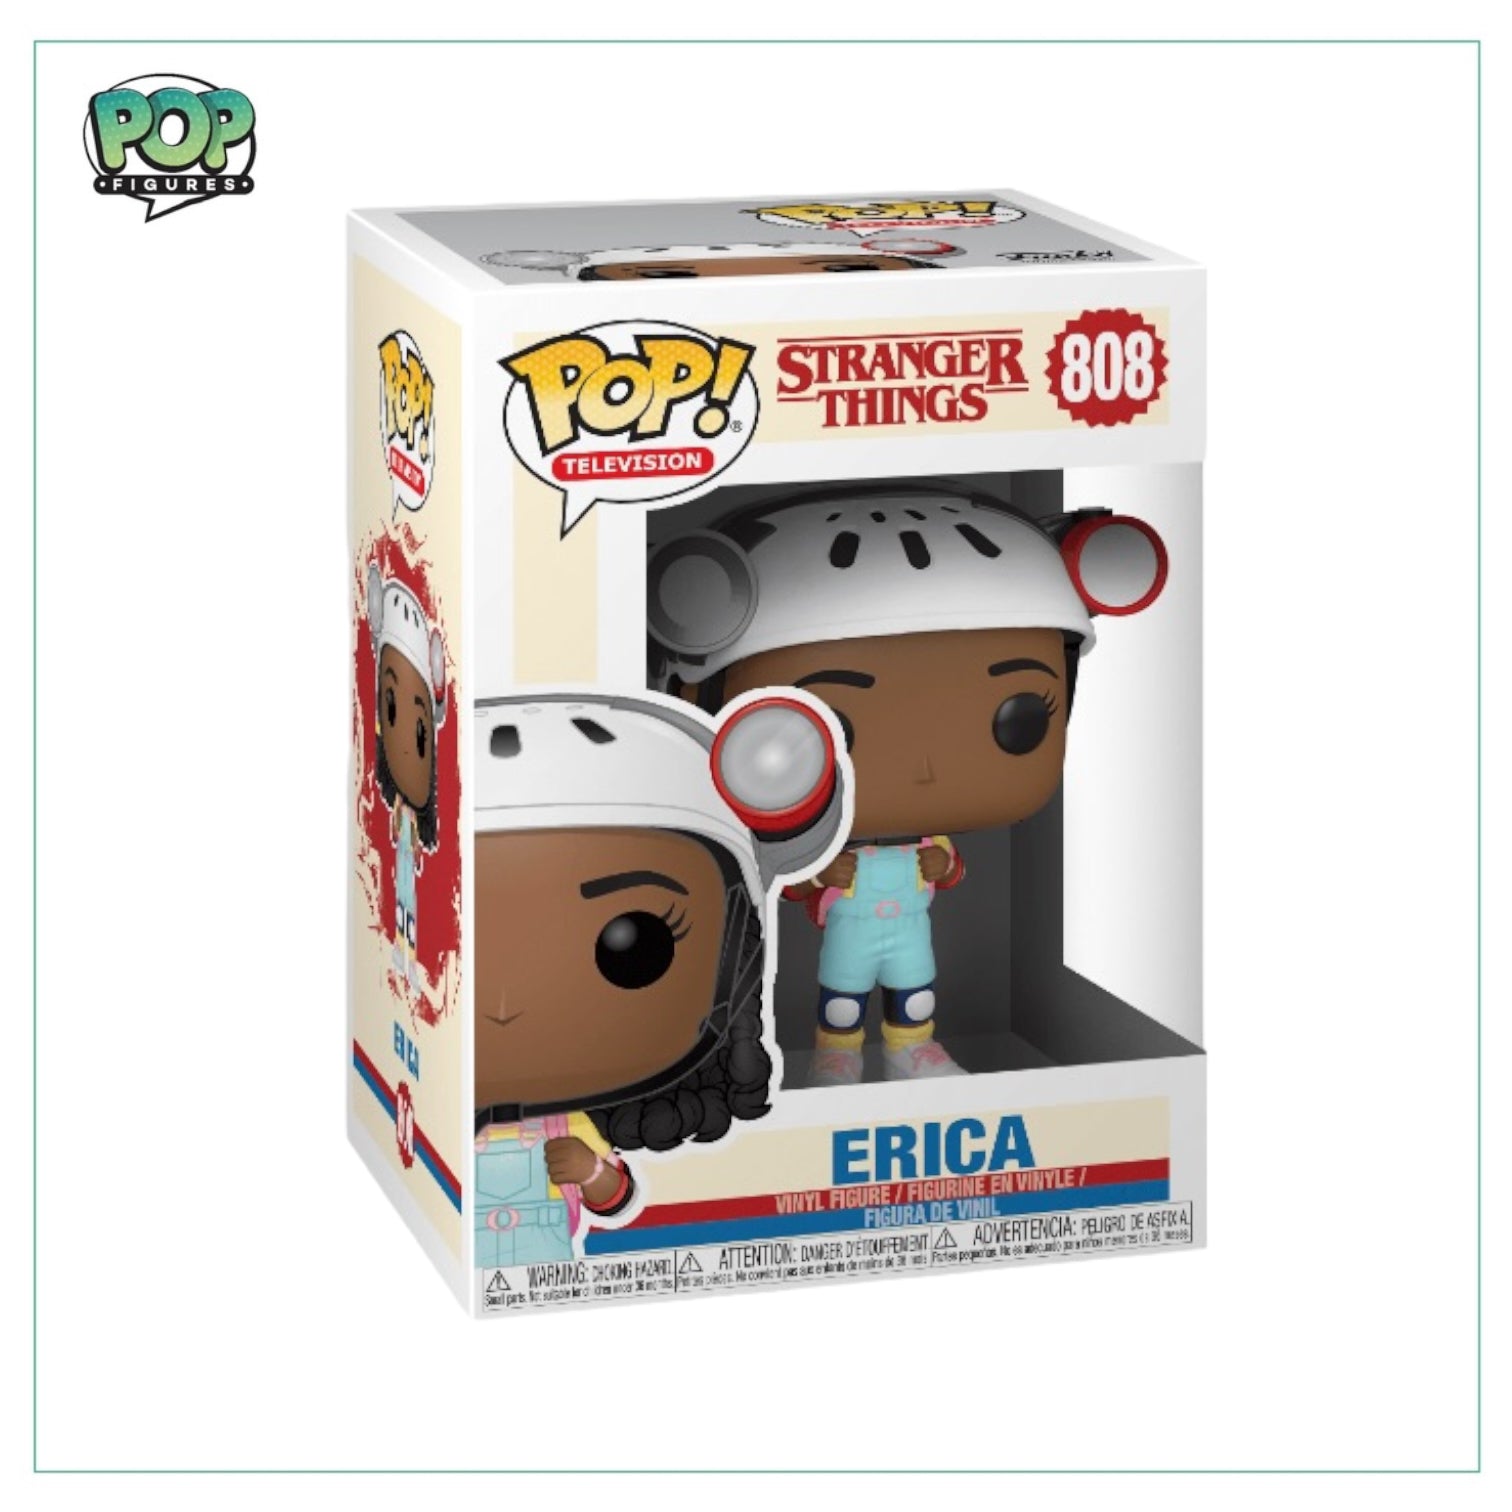 Erica #808 Funko Pop! Stranger Thing